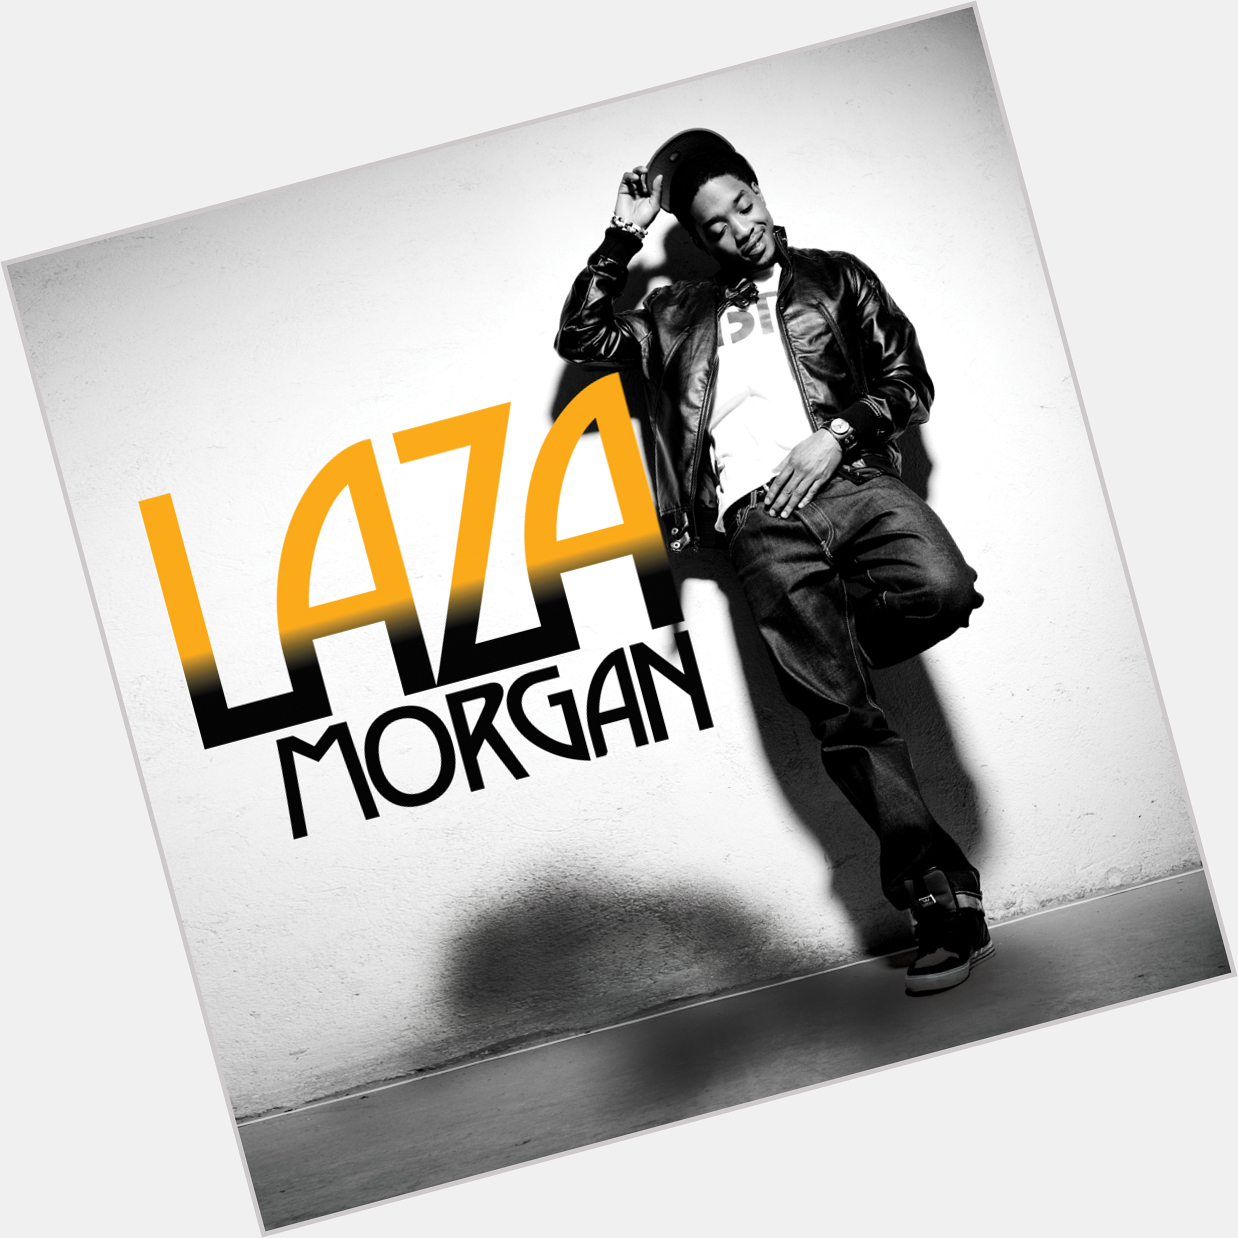 Laza Morgan sexy 3